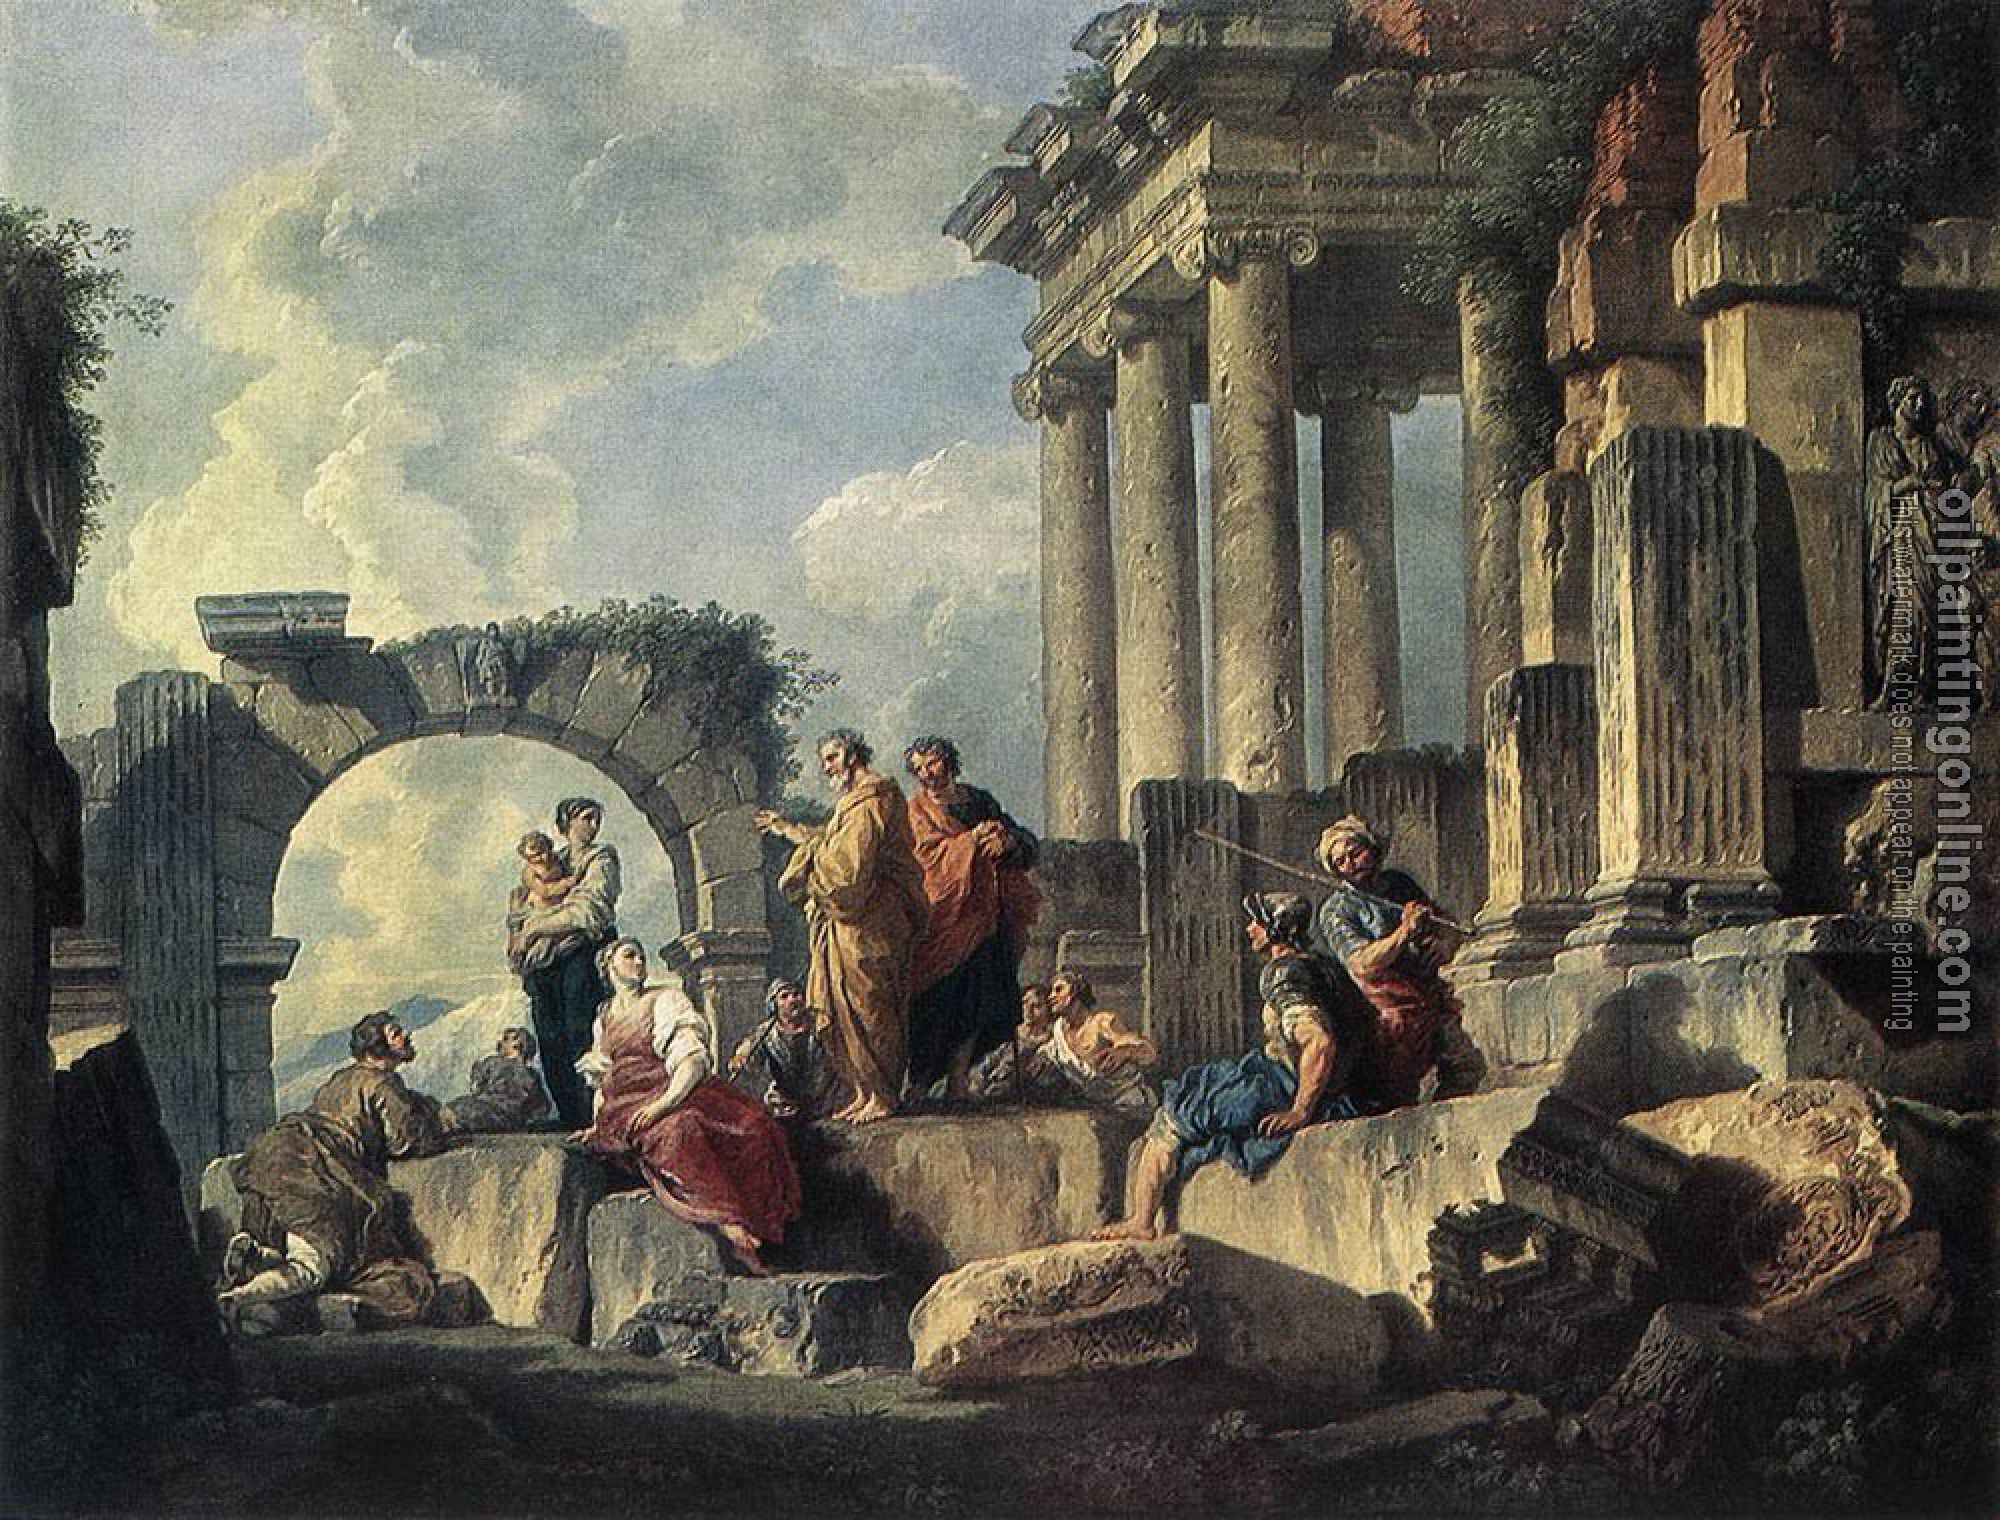 Giovanni Paolo Pannini - Apostle Paul Preaching On The Ruins